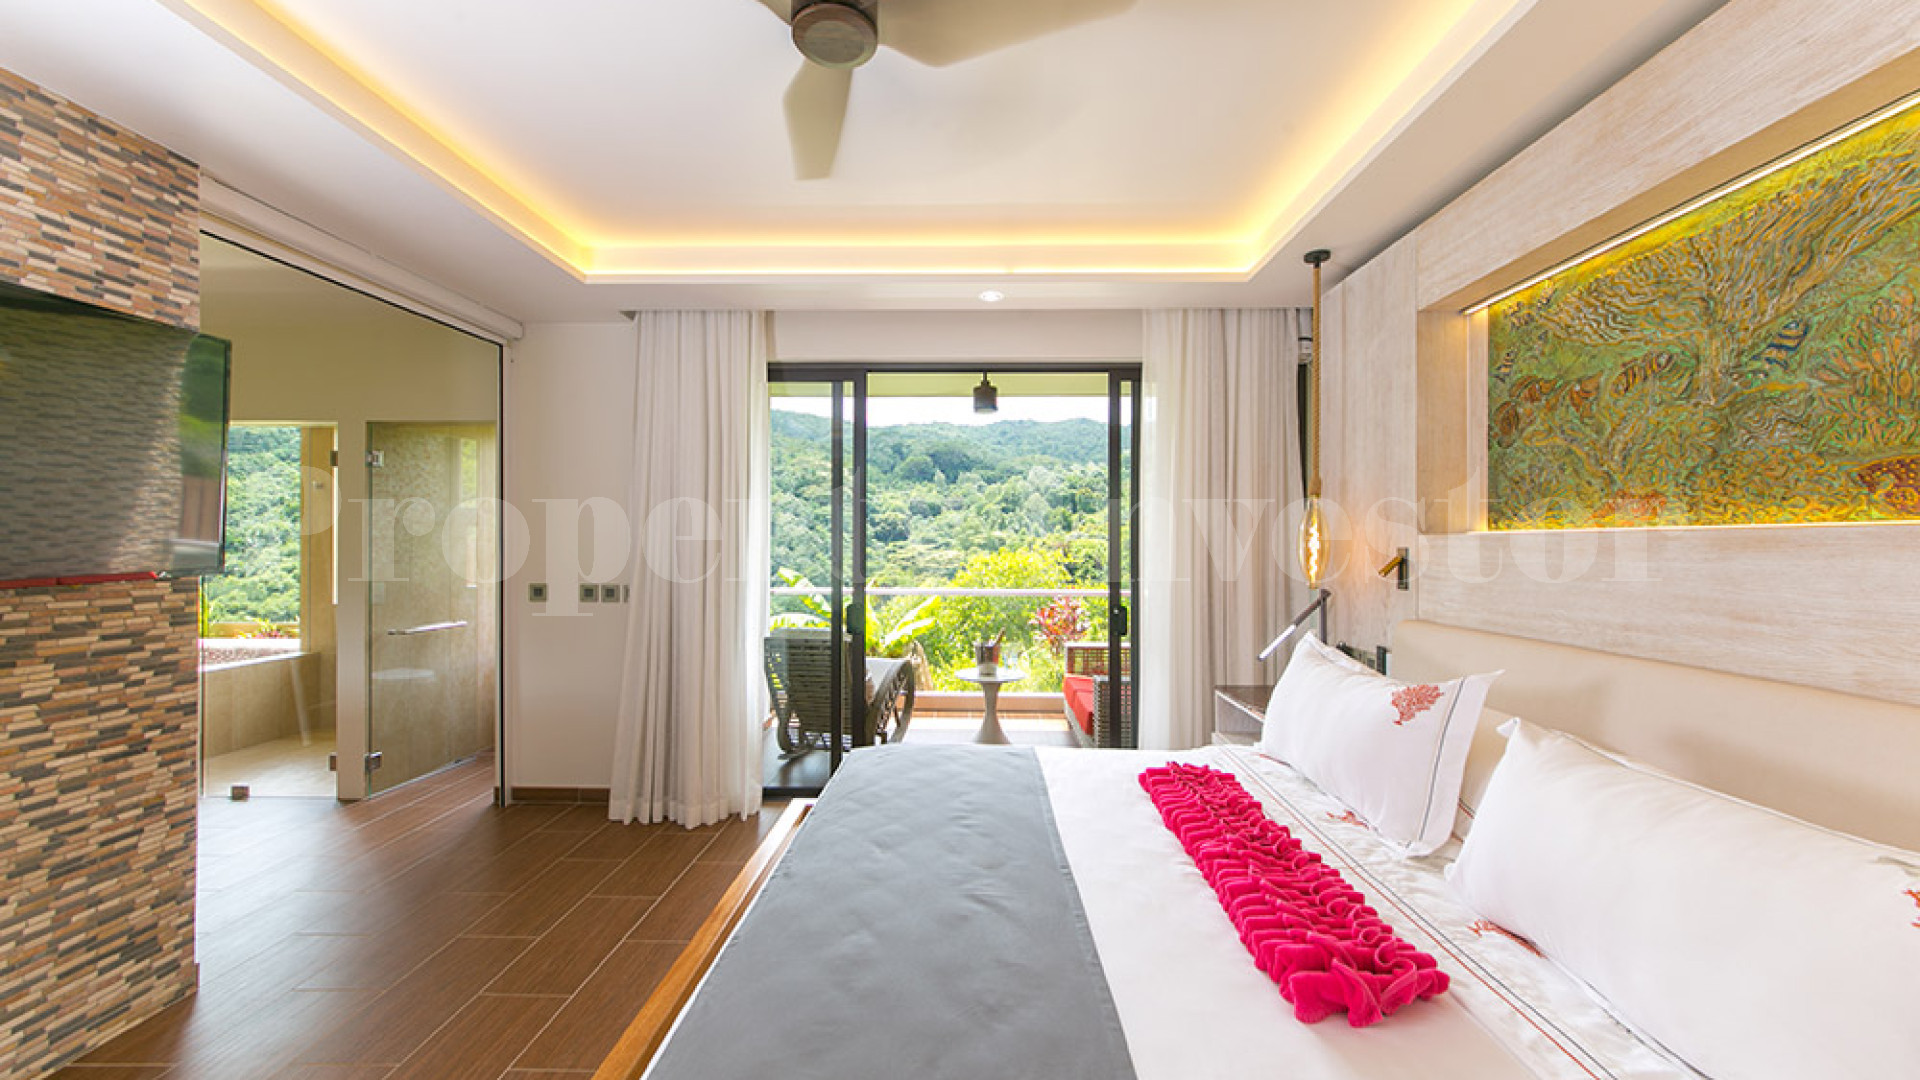 Impressive 4 Bedroom Modern Villa with 360° Views of the Indian Ocean & Surrounding Hillside for Sale on Praslin Island, Seychelles